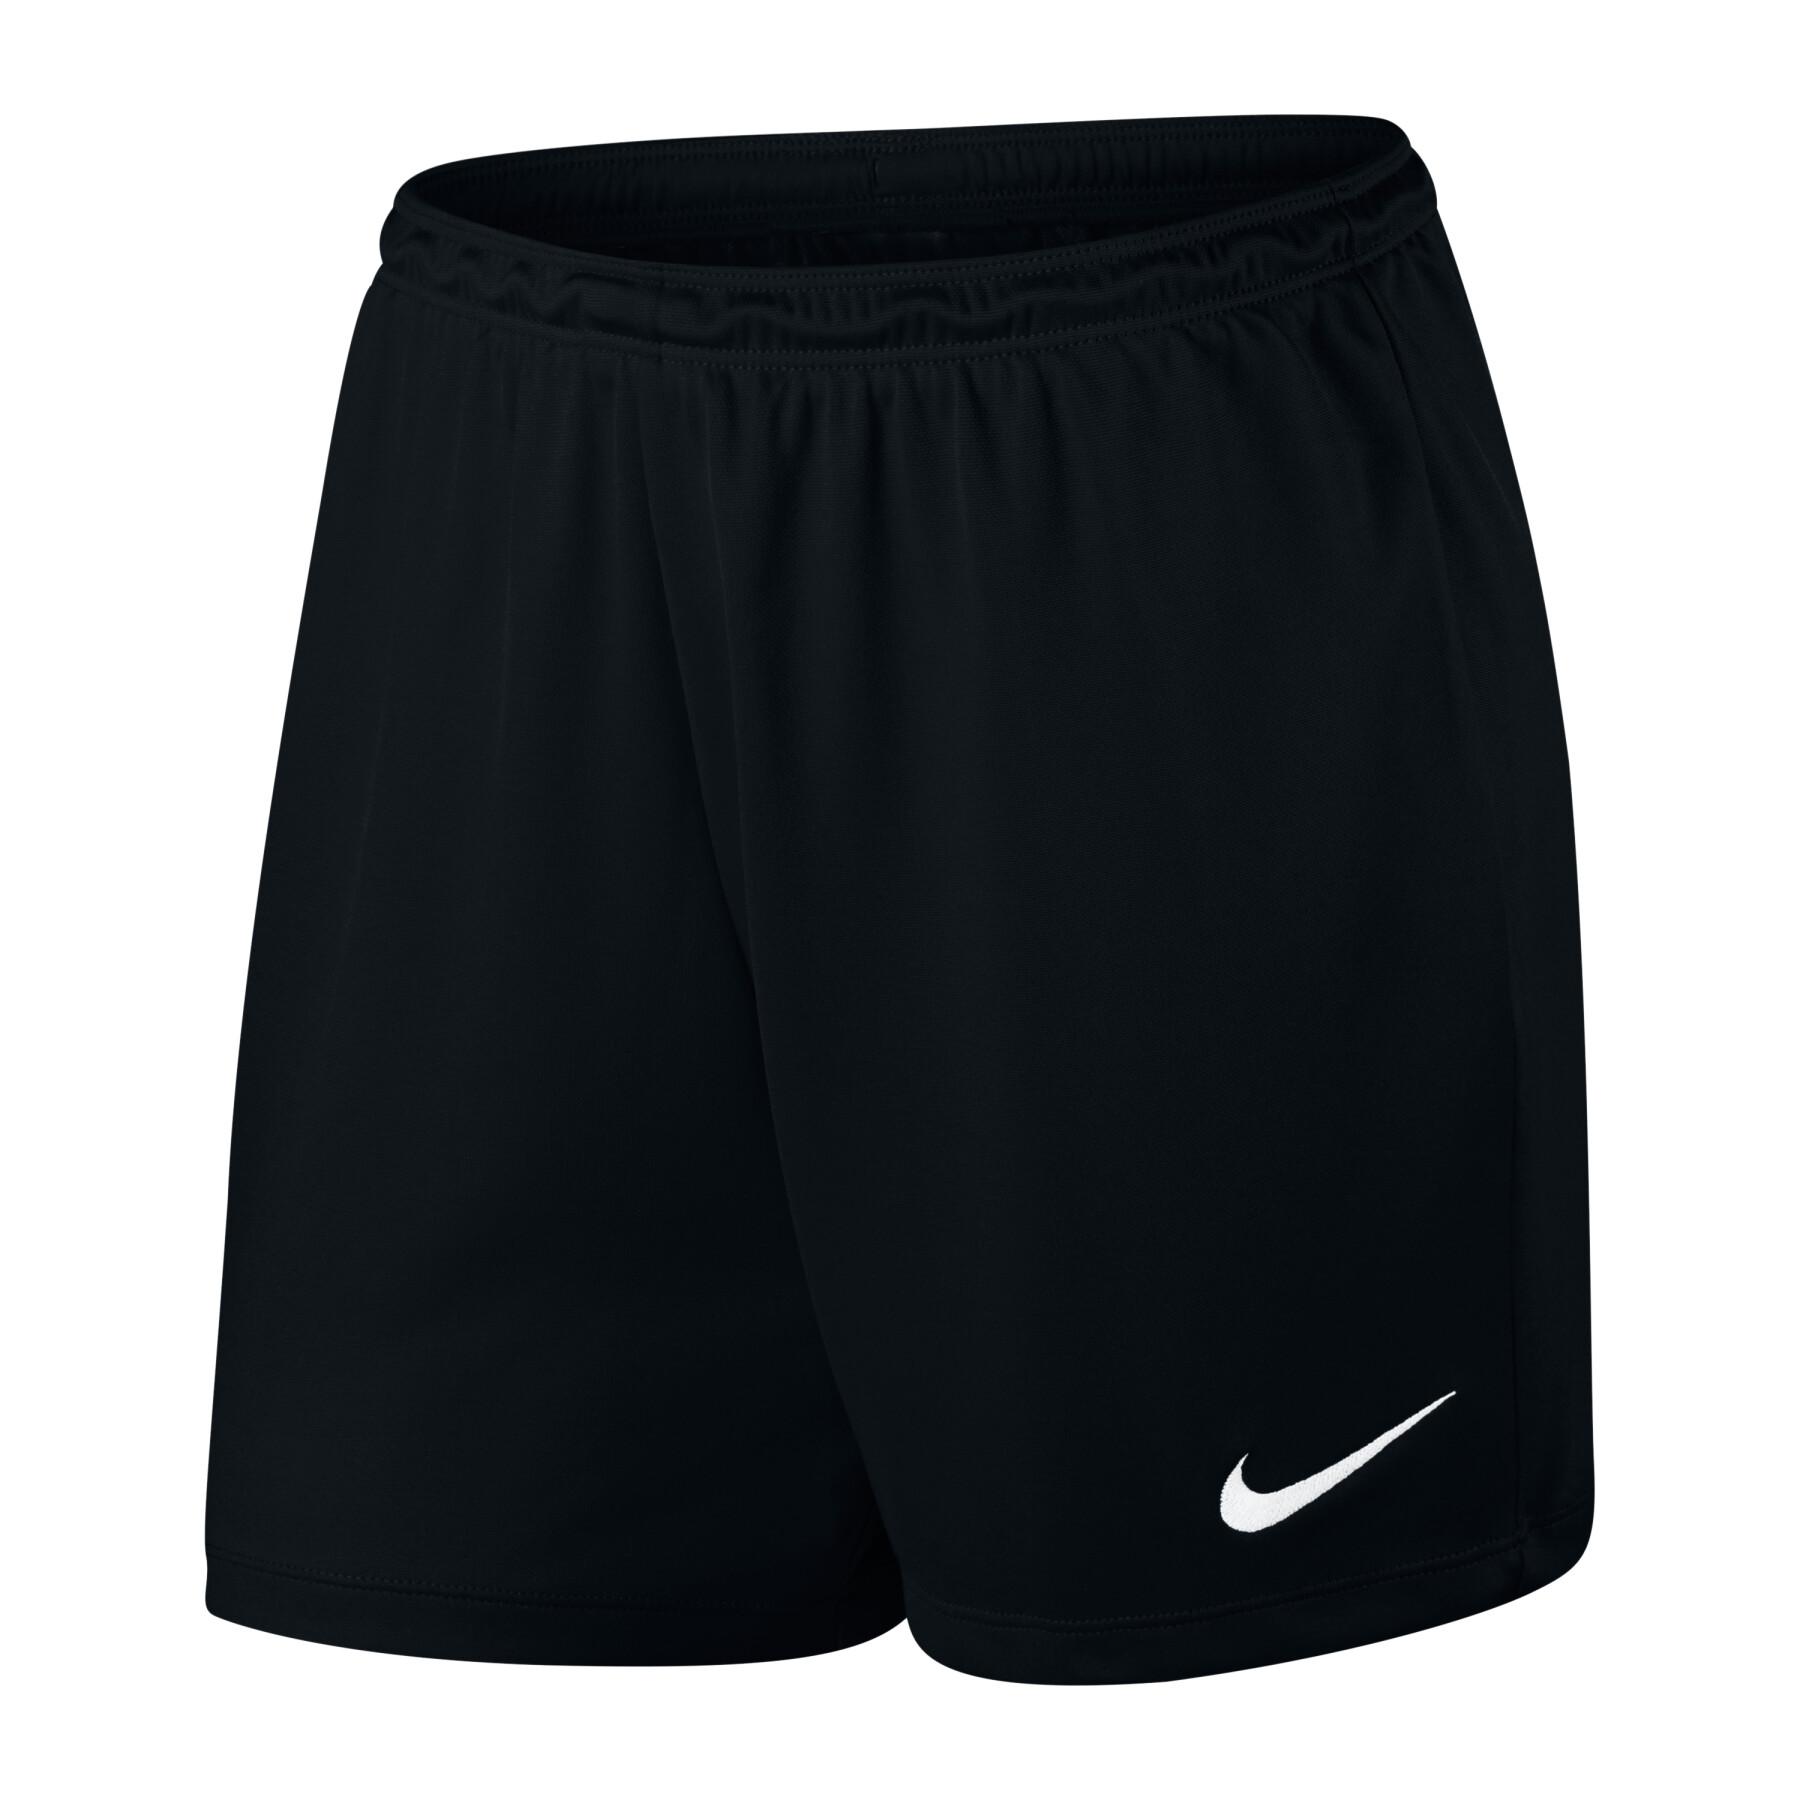 Women's shorts Nike Park